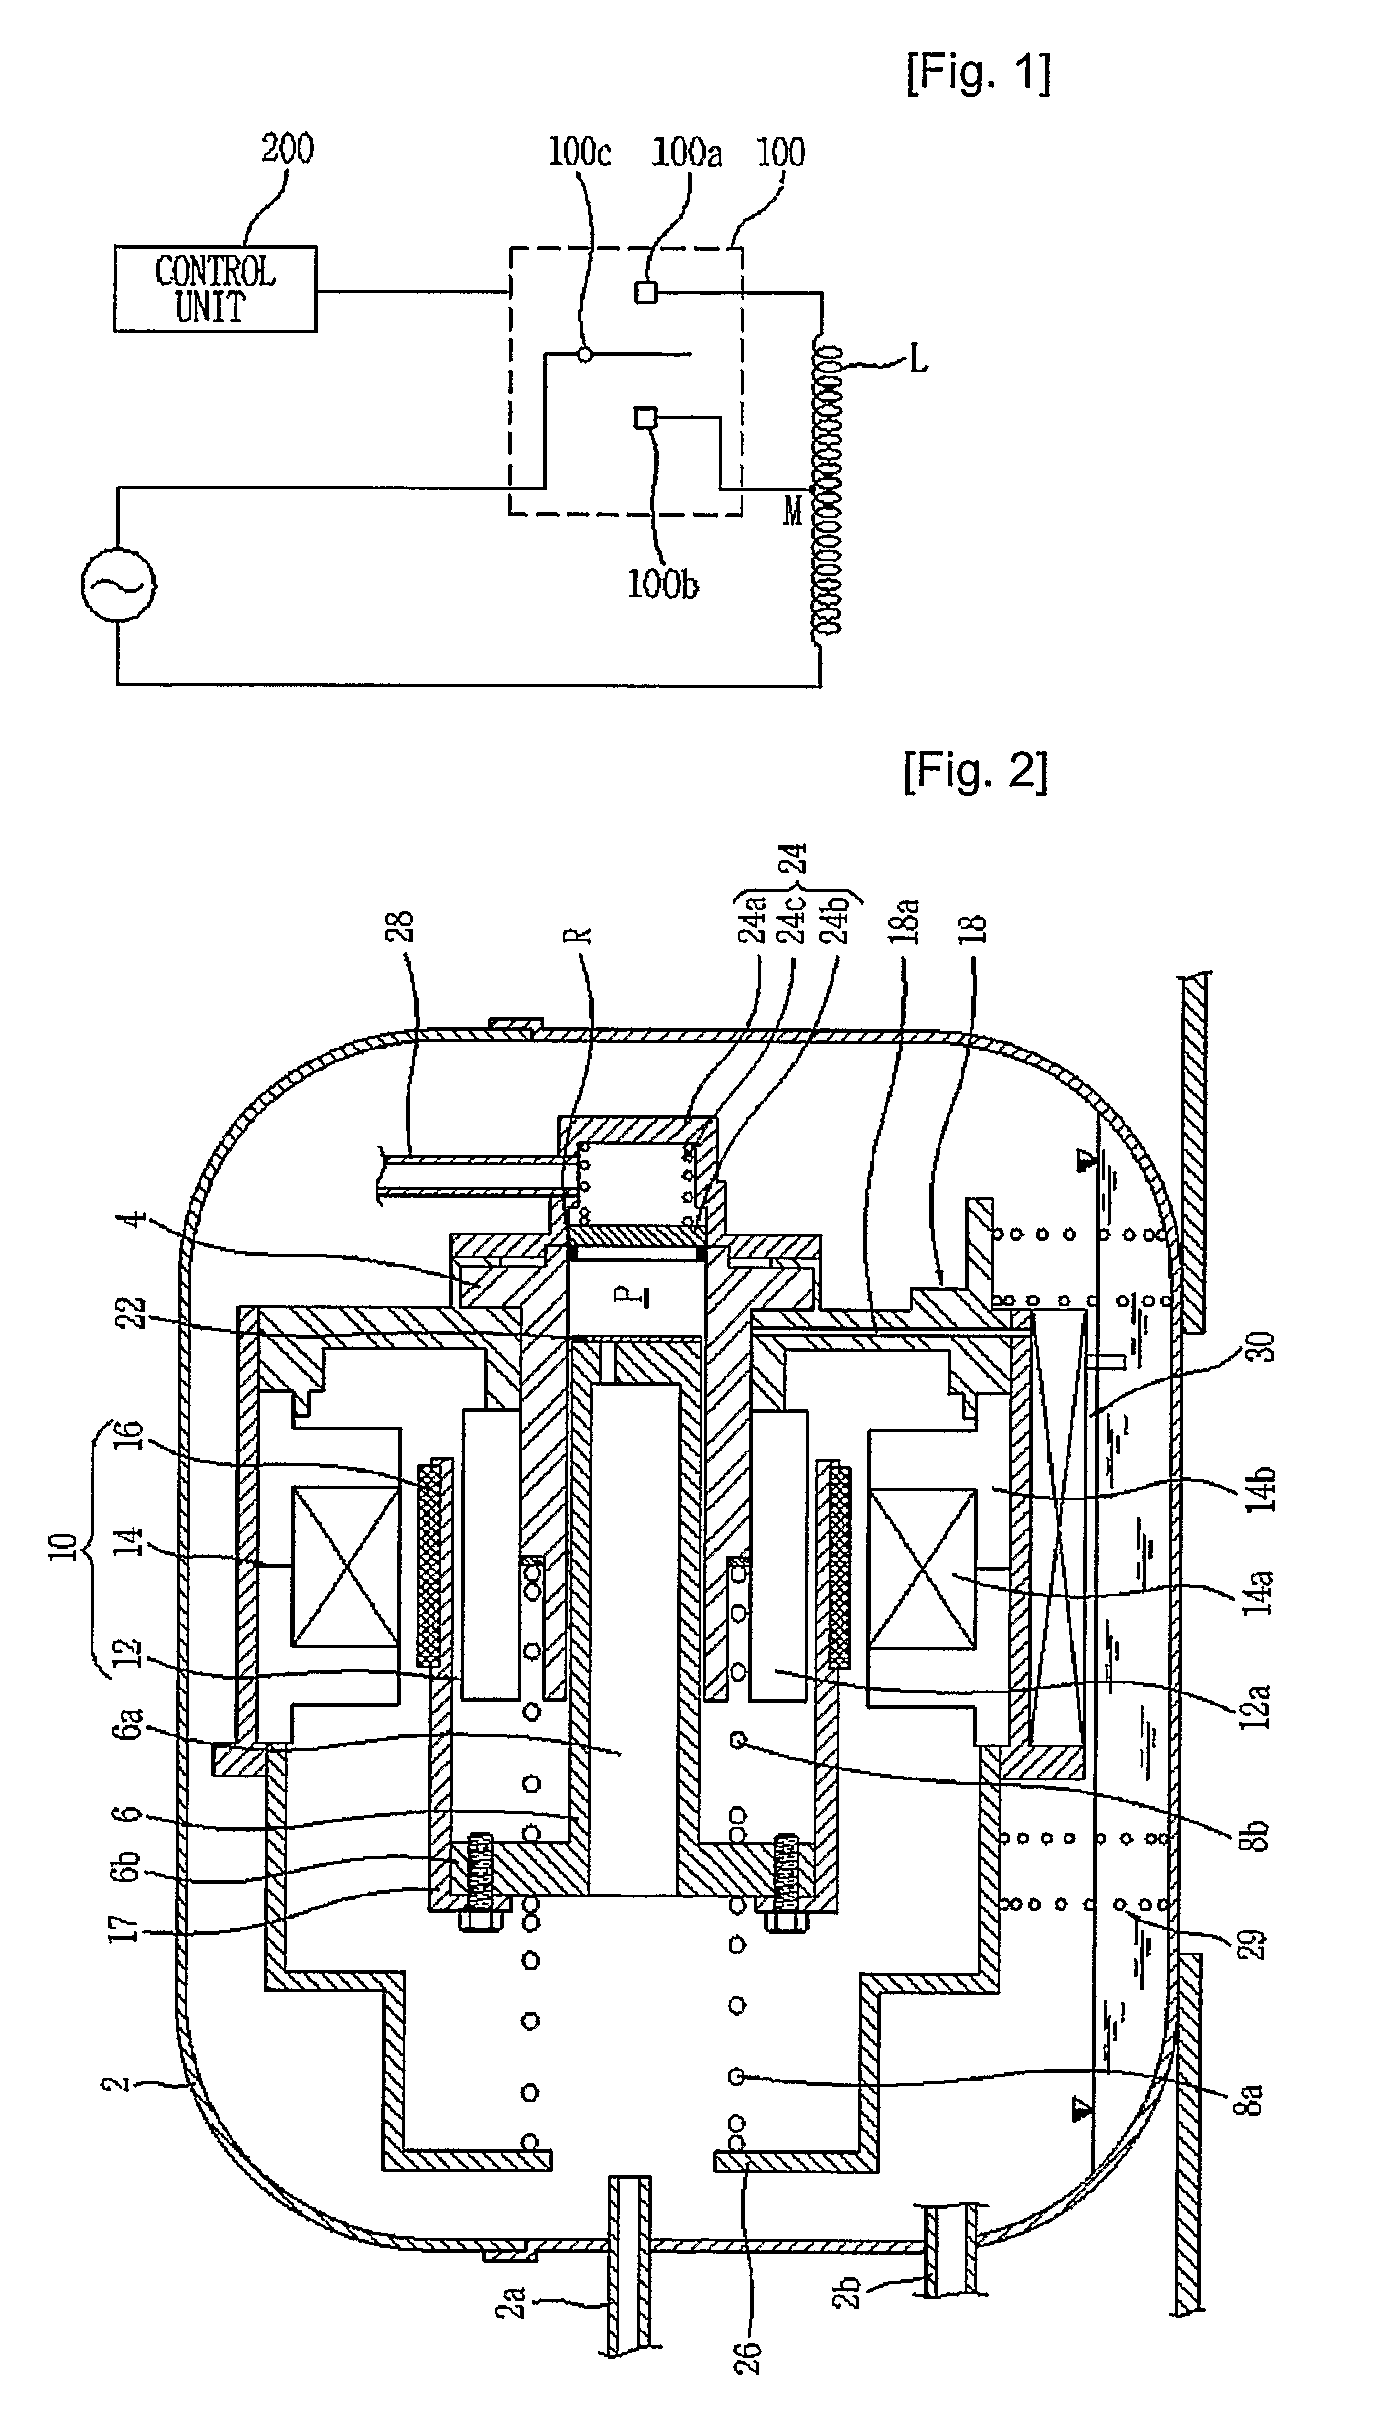 Control apparatus for linear compressor